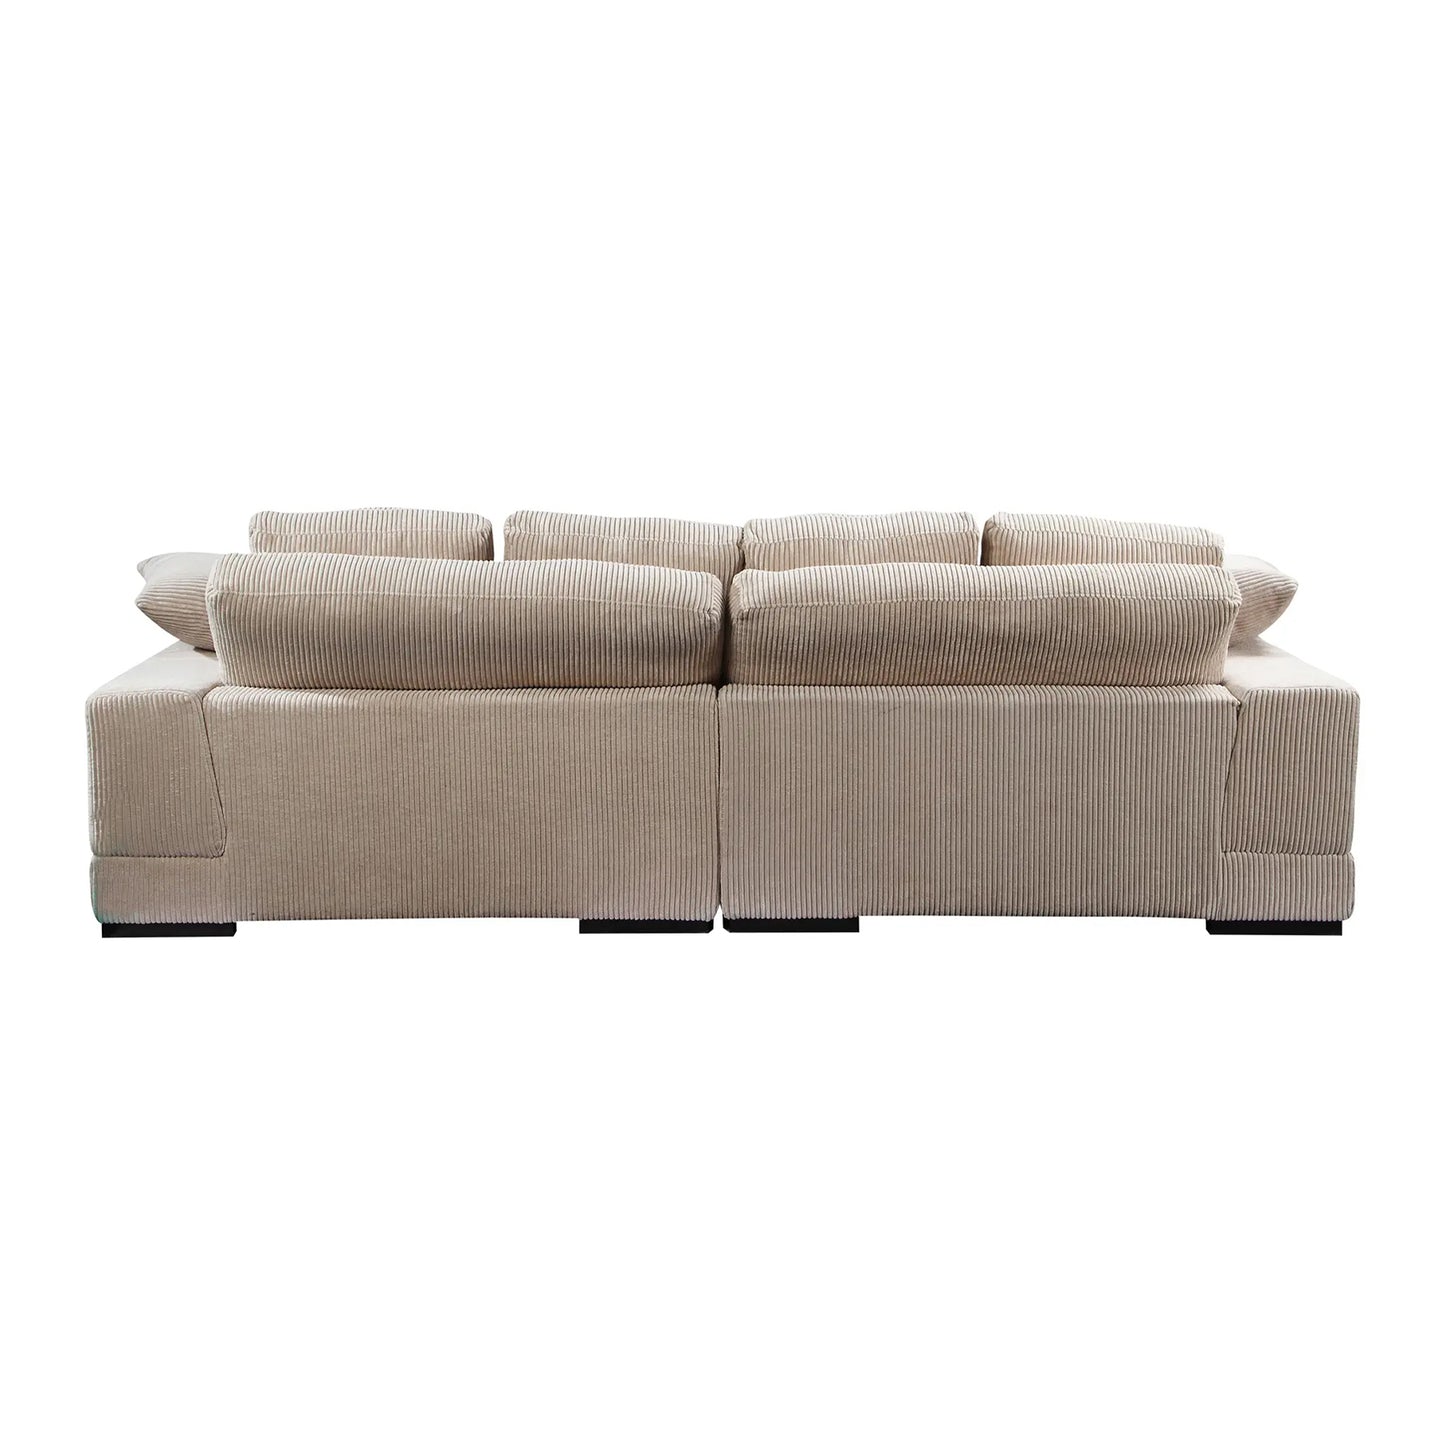 Plush Reversible Deep Seat Sectional Sofa, Cappuccino